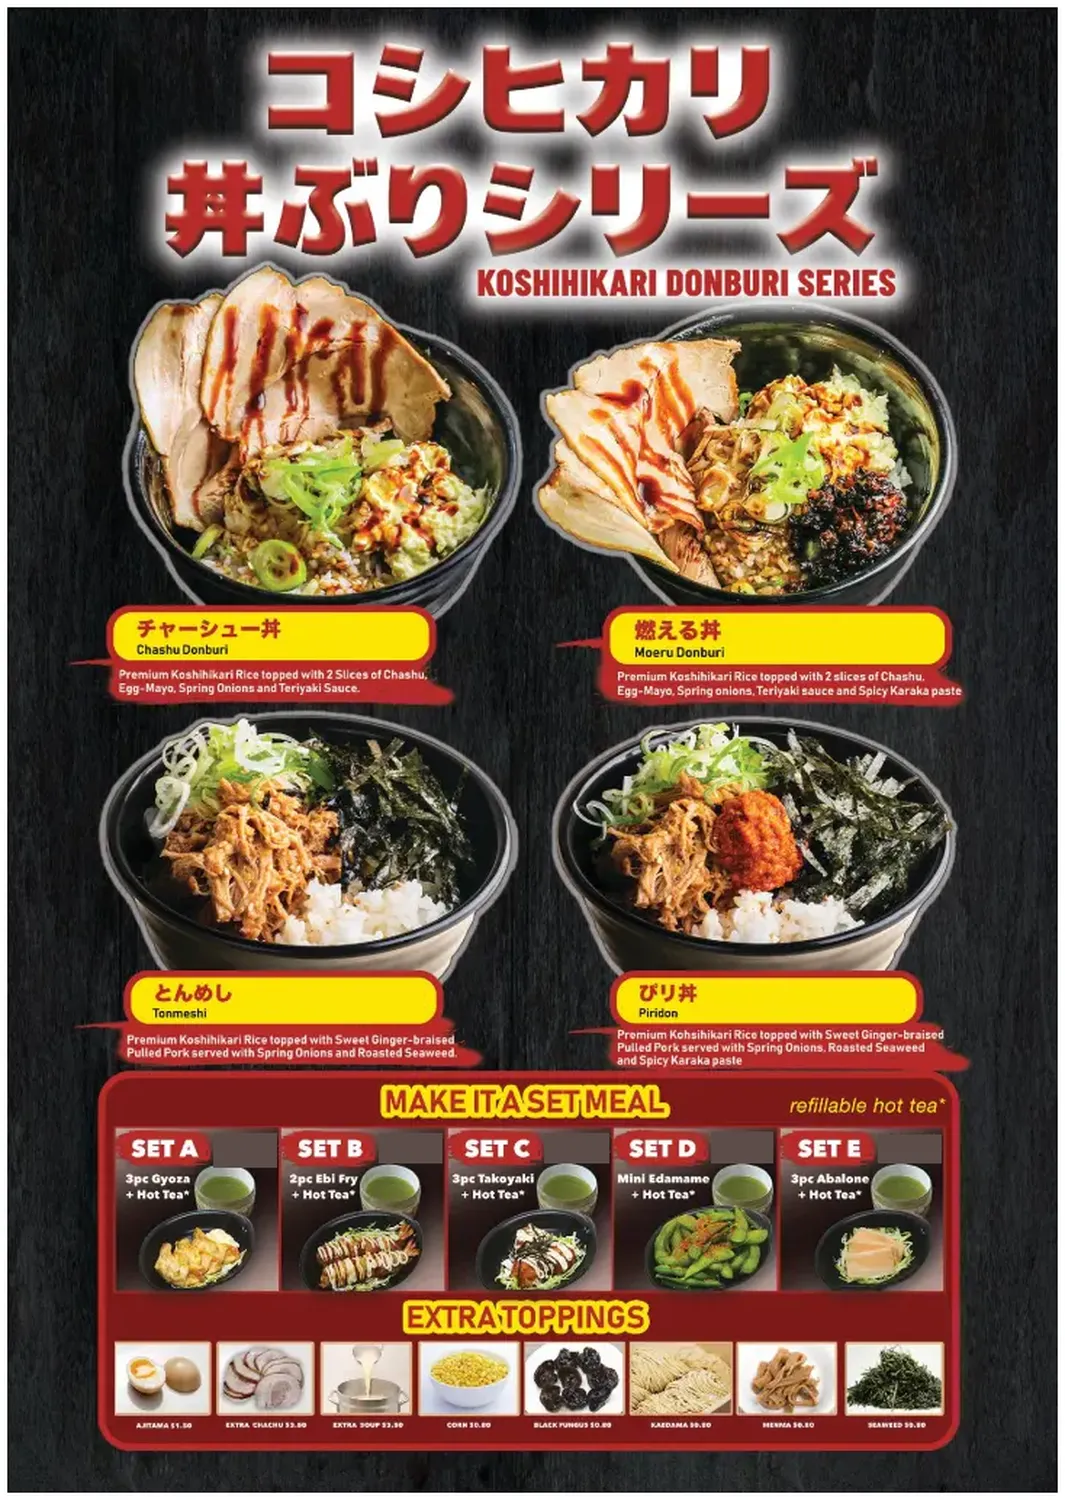 takagi ramen menu singapore koshihikari donburi series 2